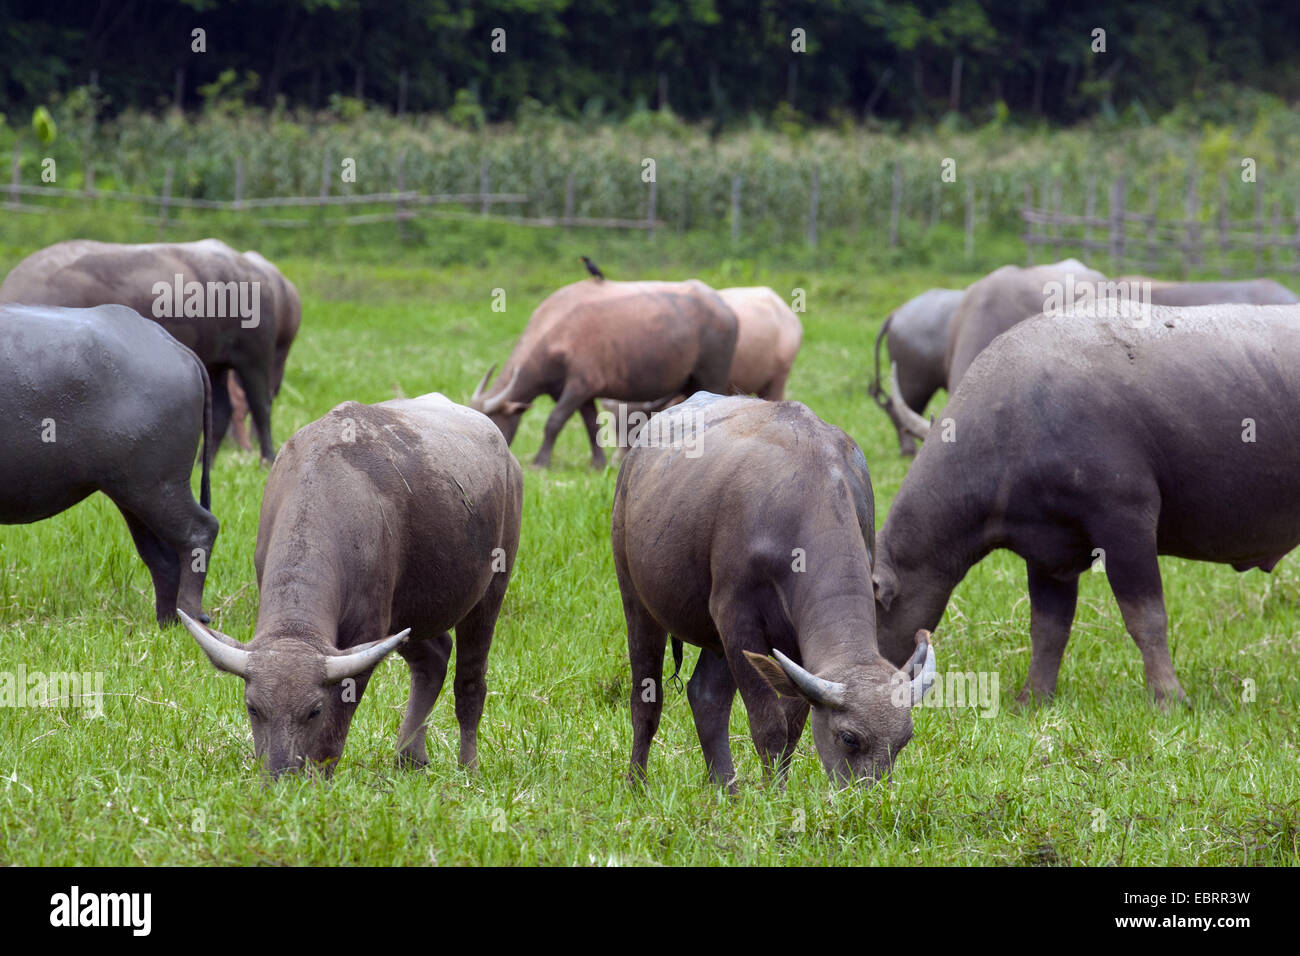 Buffle d'Asie, wild water buffalo, carabao (Bubalus bubalis, Bubalus arnee), le pâturage dans le pré, la Thaïlande, Chiang Mai Banque D'Images